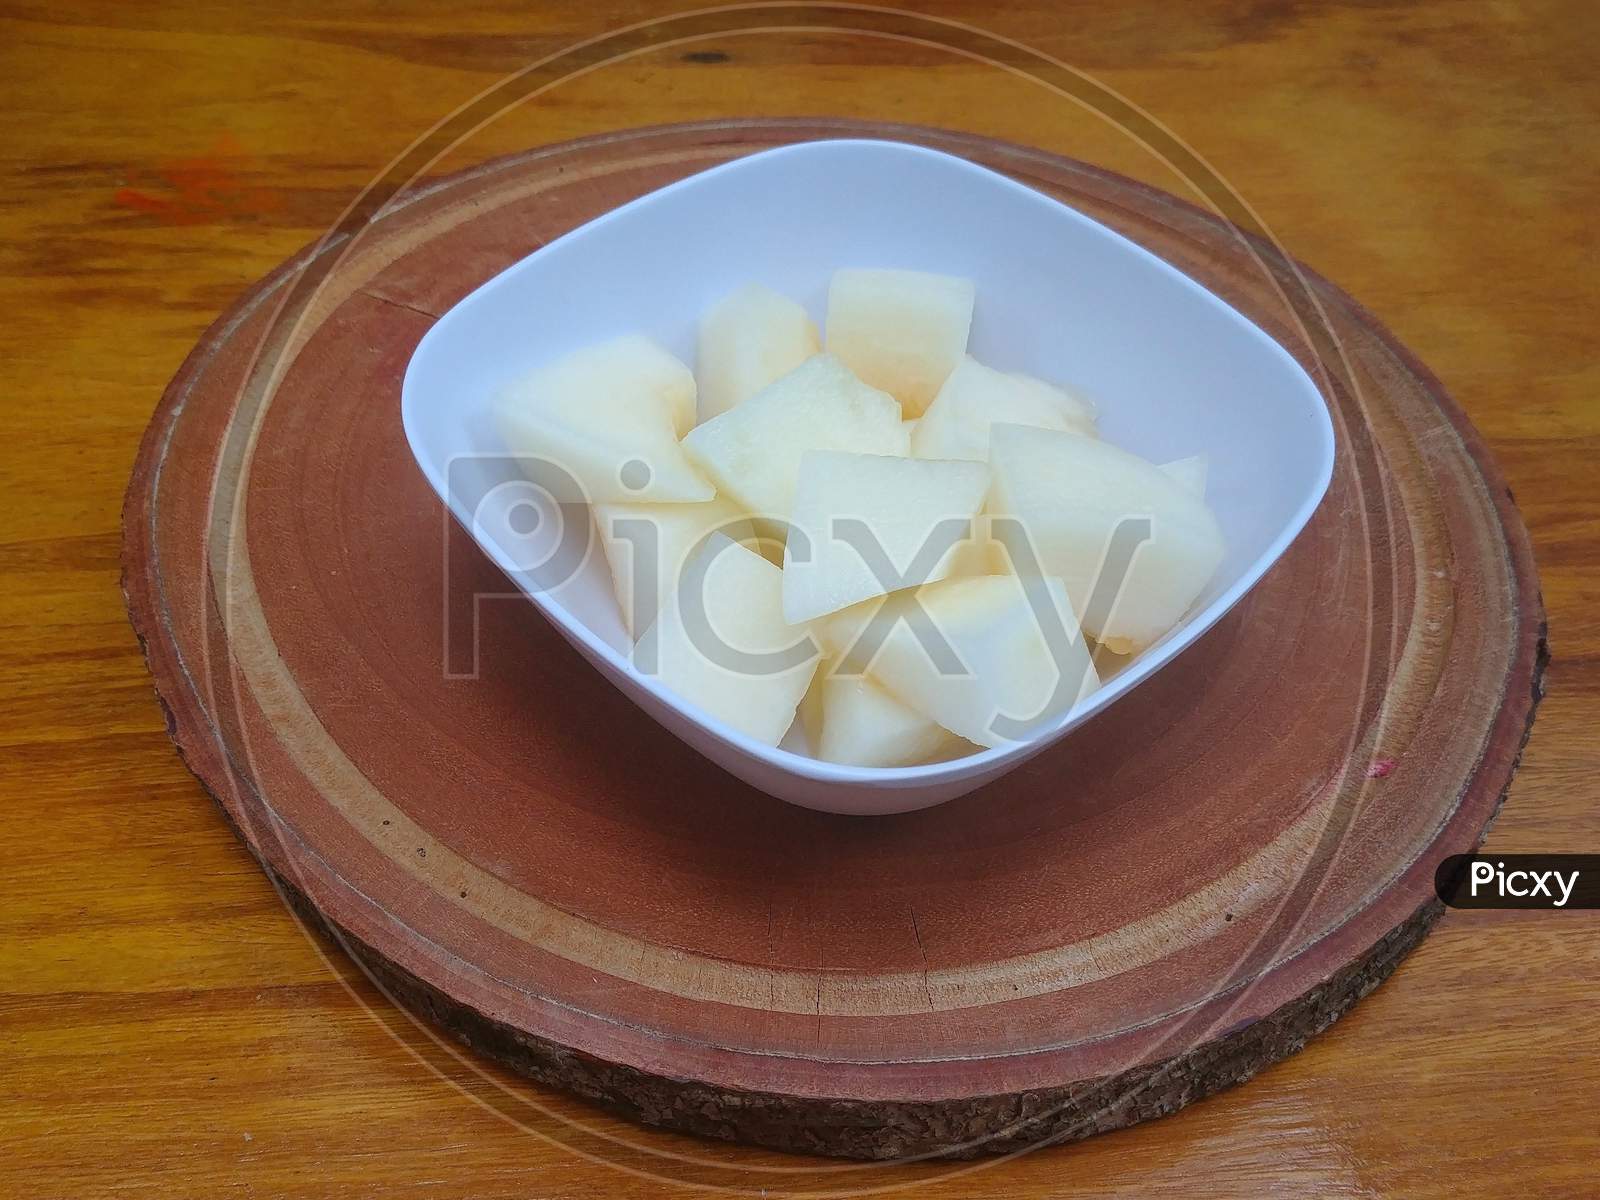 Delicious pieces of melon in a square bowl